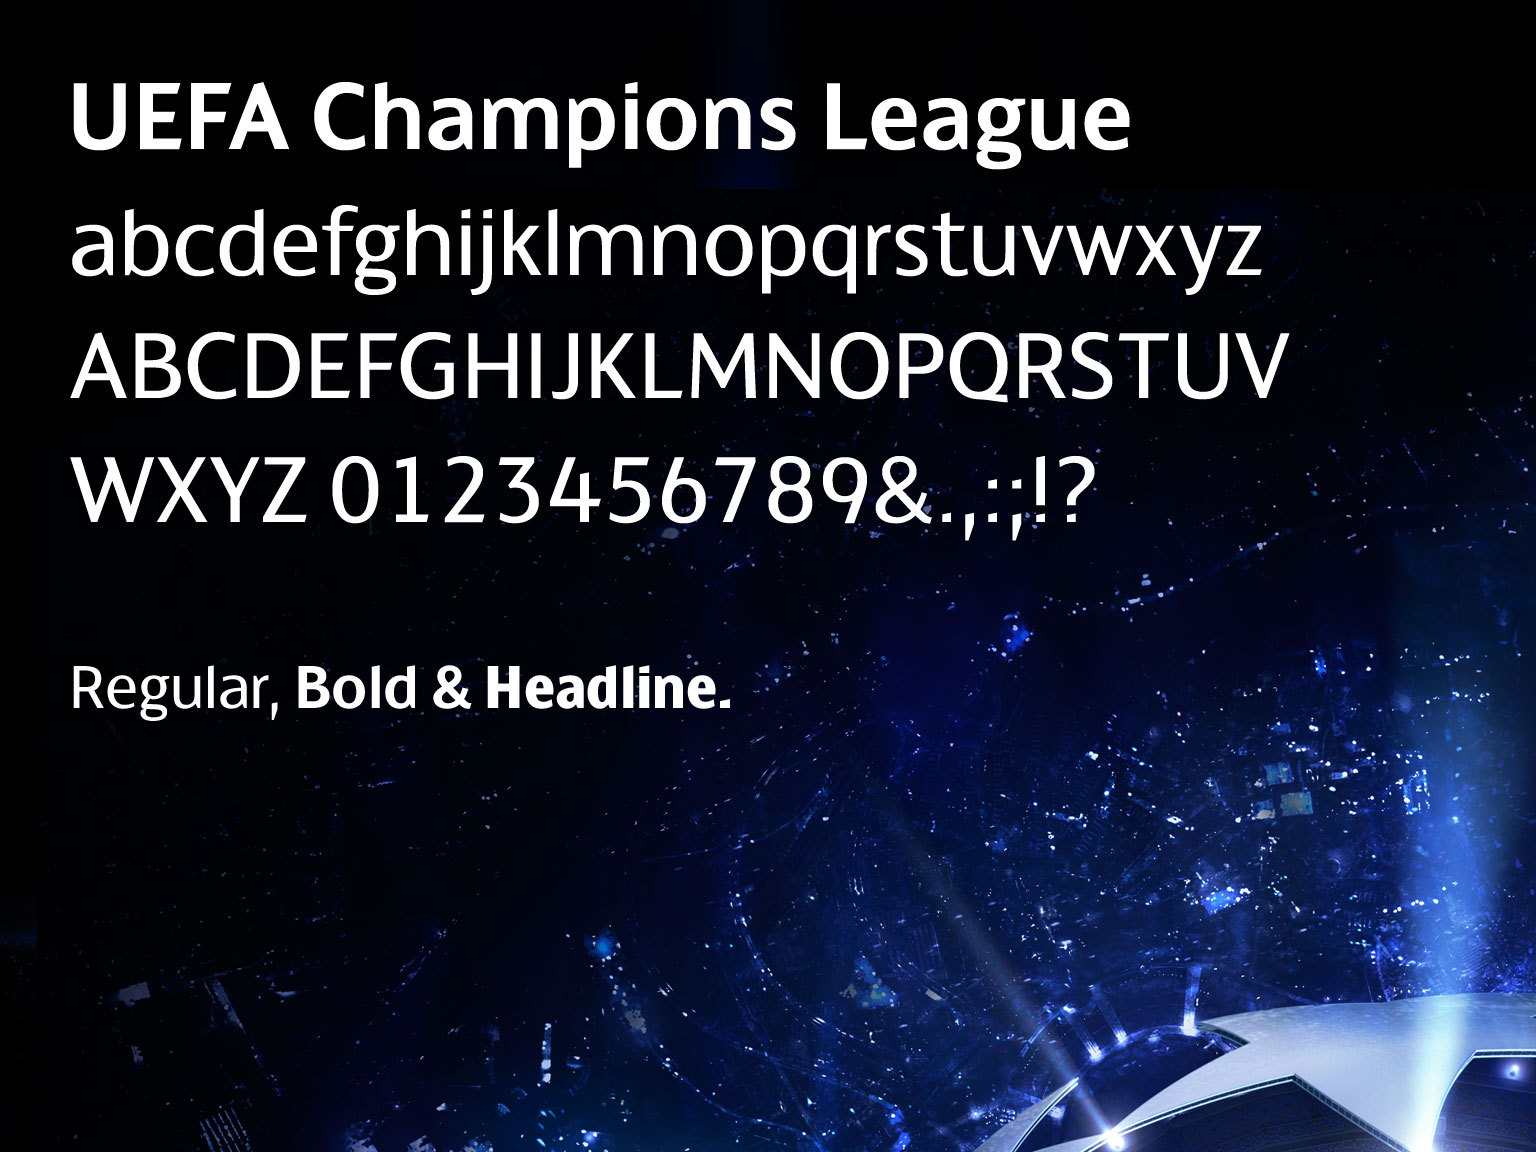 download uefa champions league font